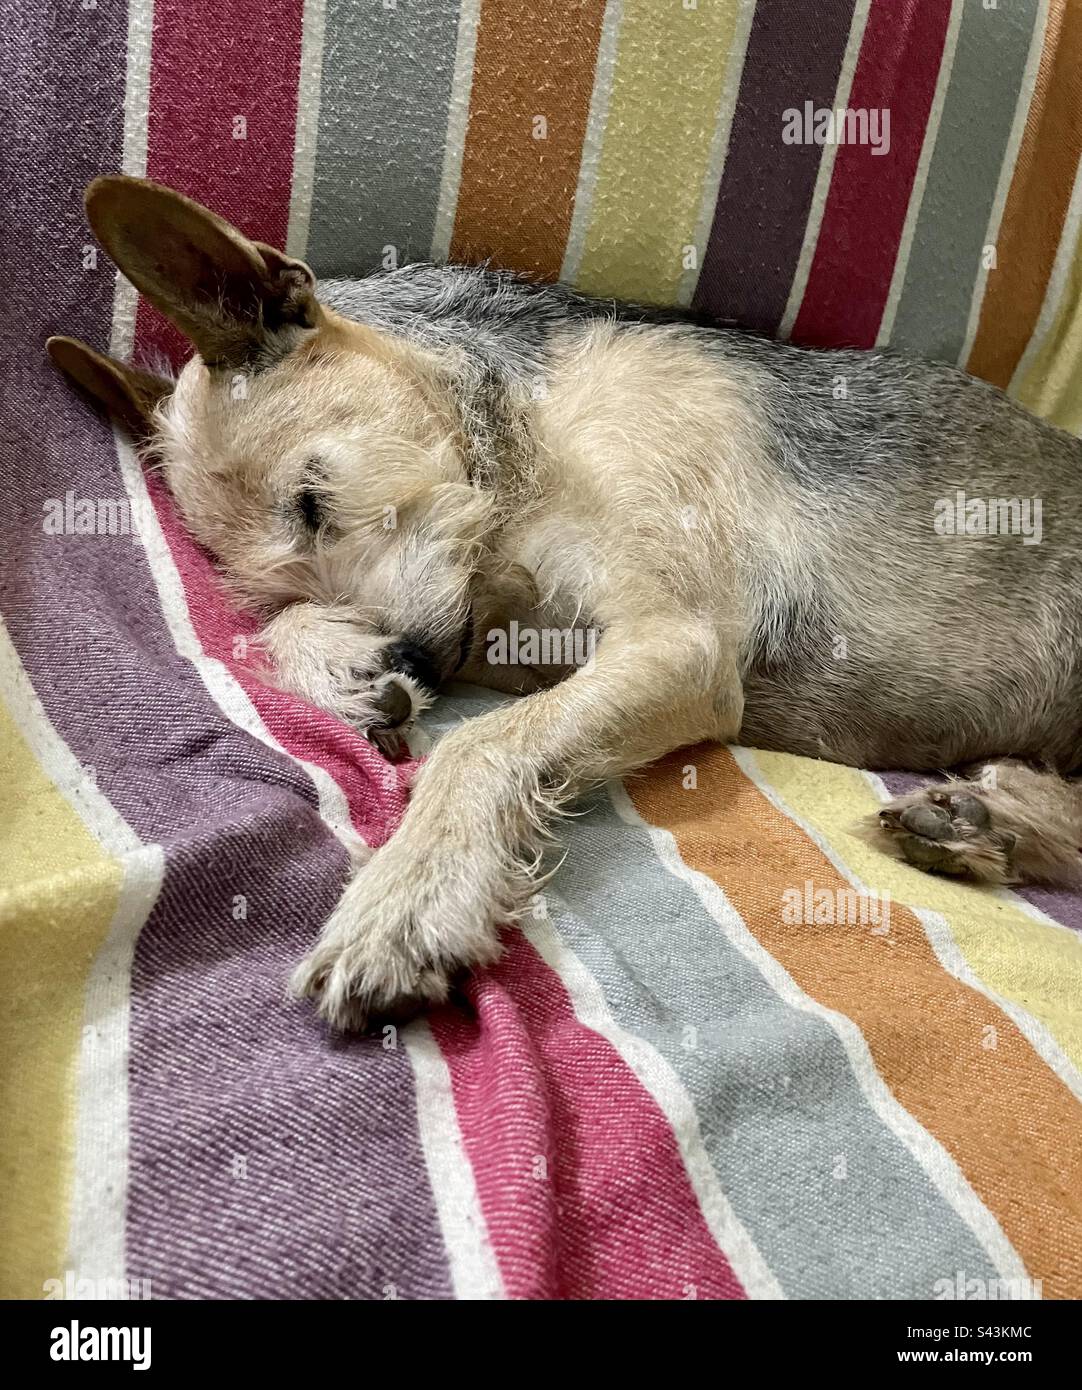 Sleeping Dog. Stock Photo